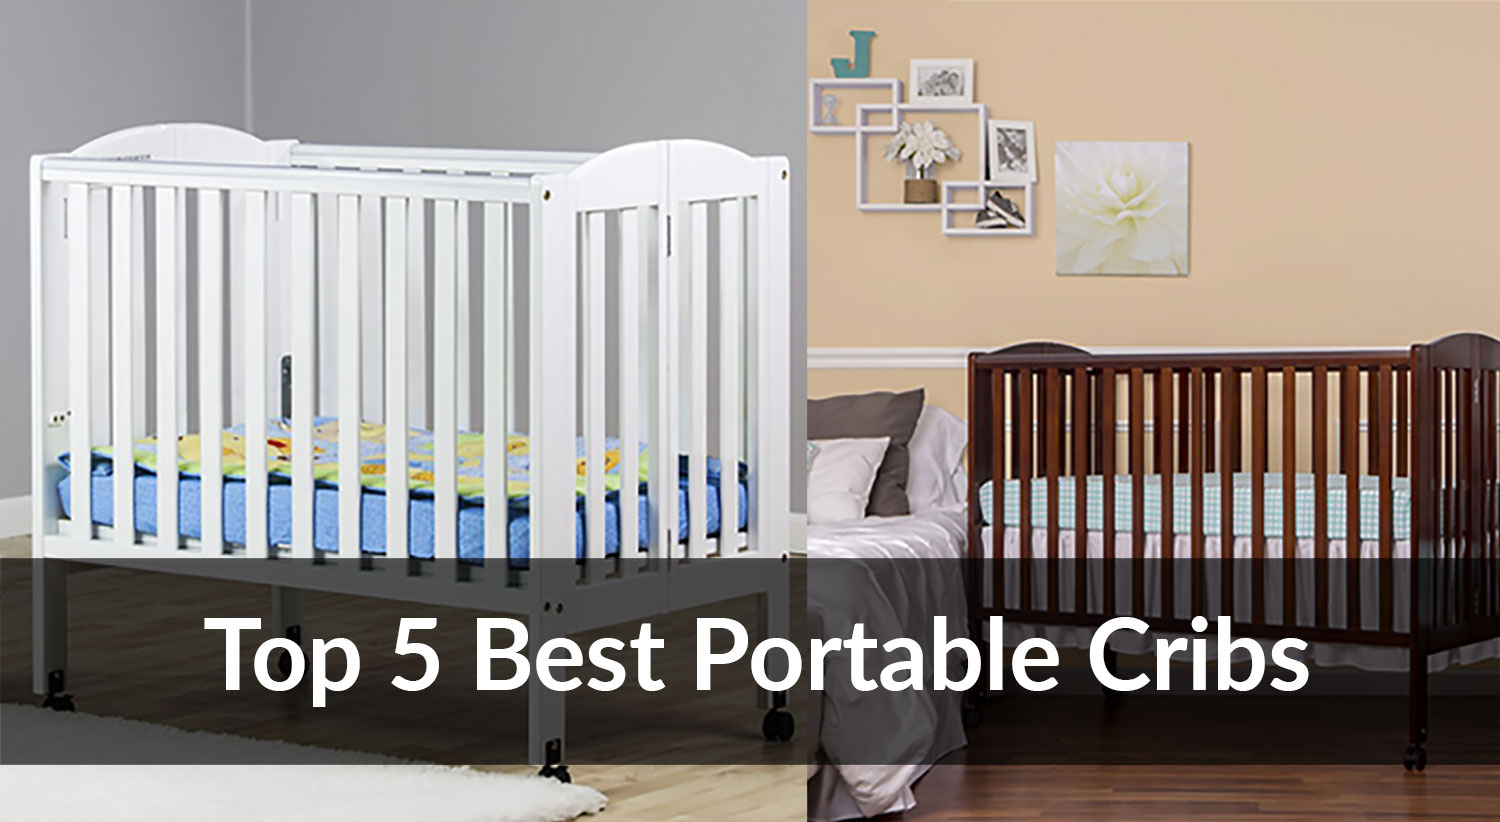 Best Portable Crib